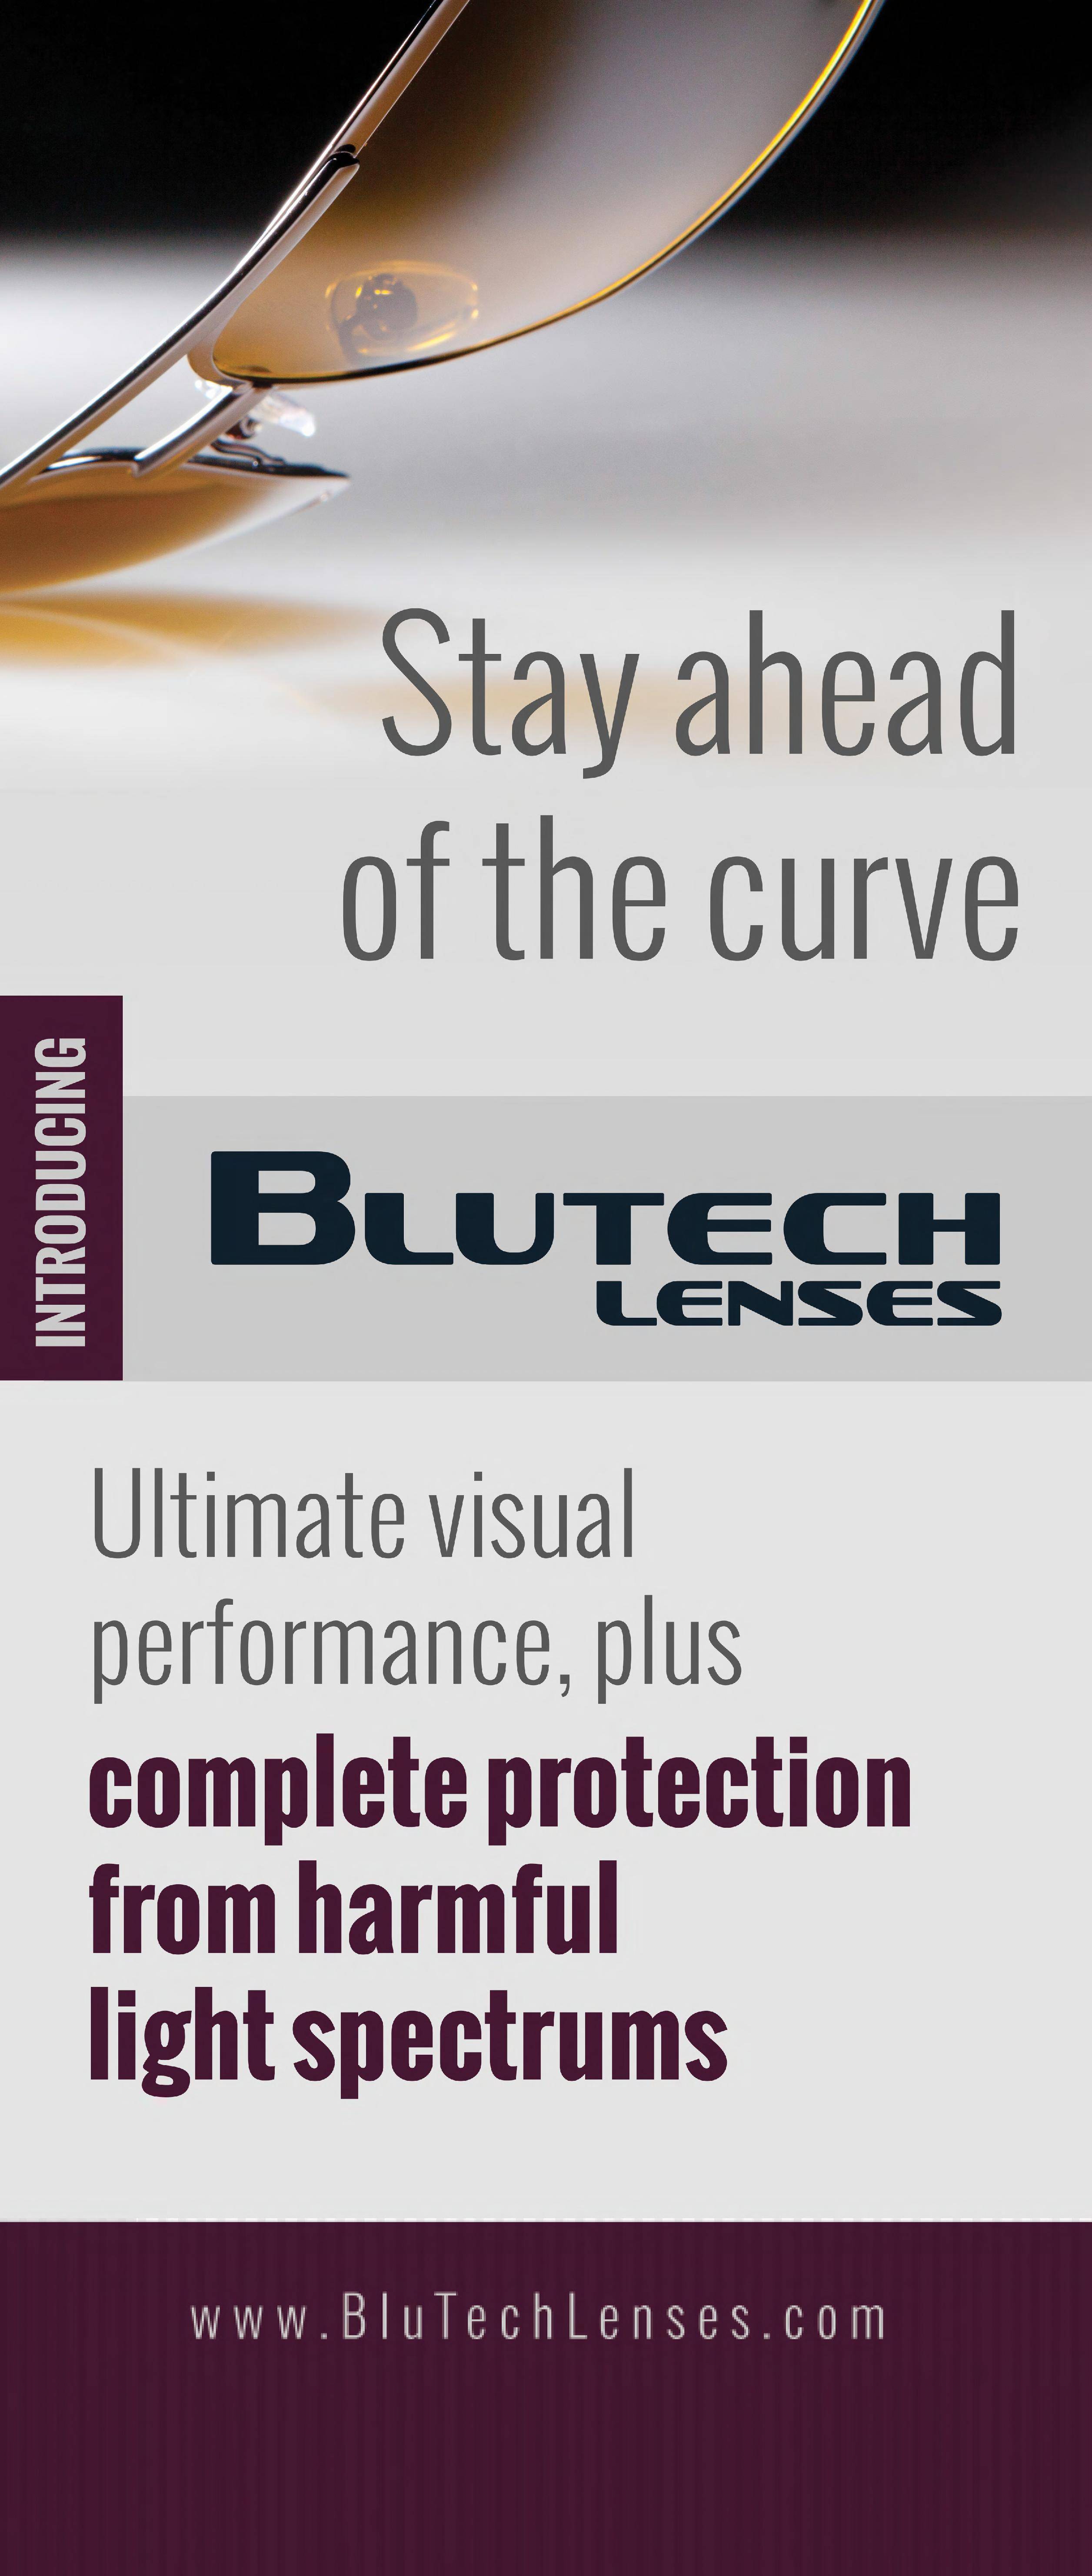 bluetech lenses for computer protection